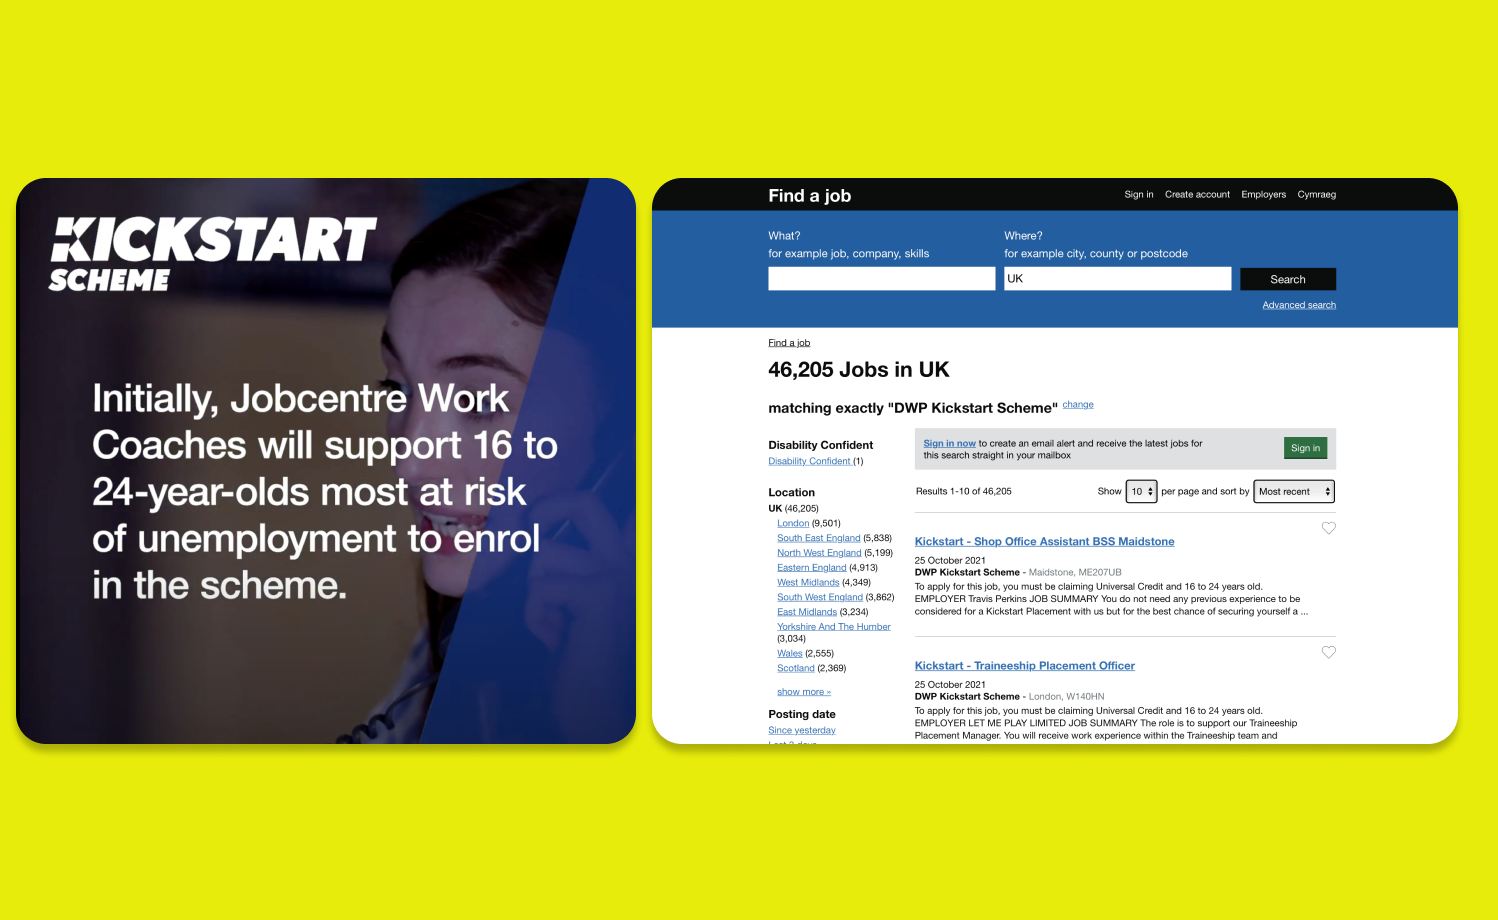 Screenshots of the Kickstart Scheme Job page and summary of the scheme